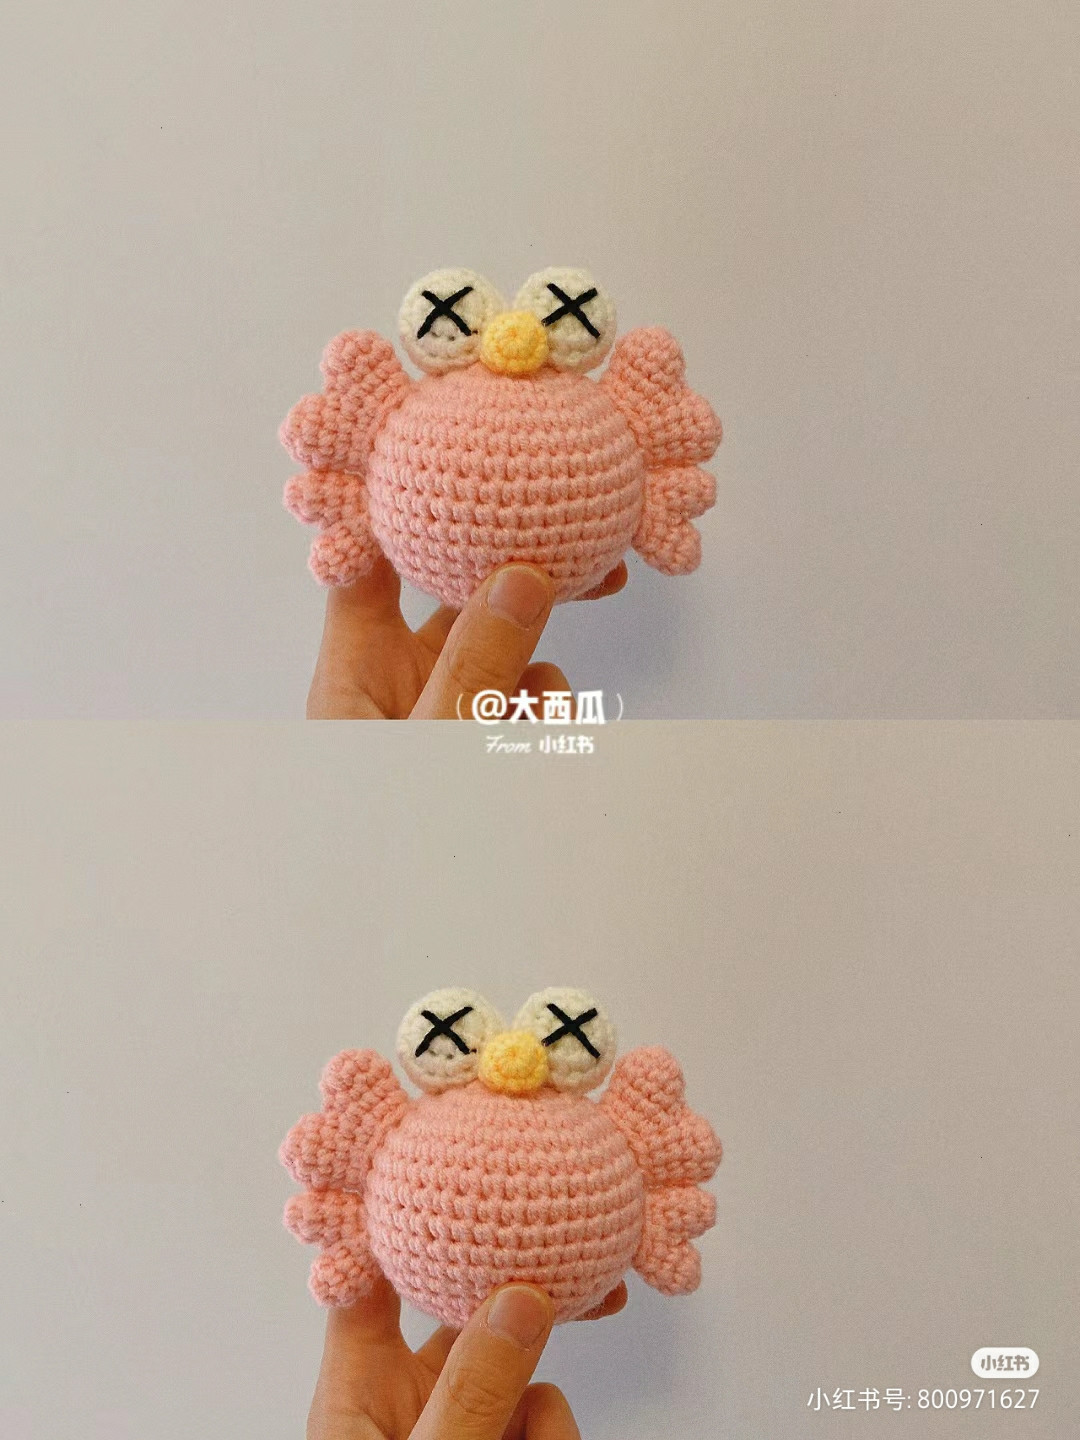 pink crab, blue, white eyes, crochet pattern